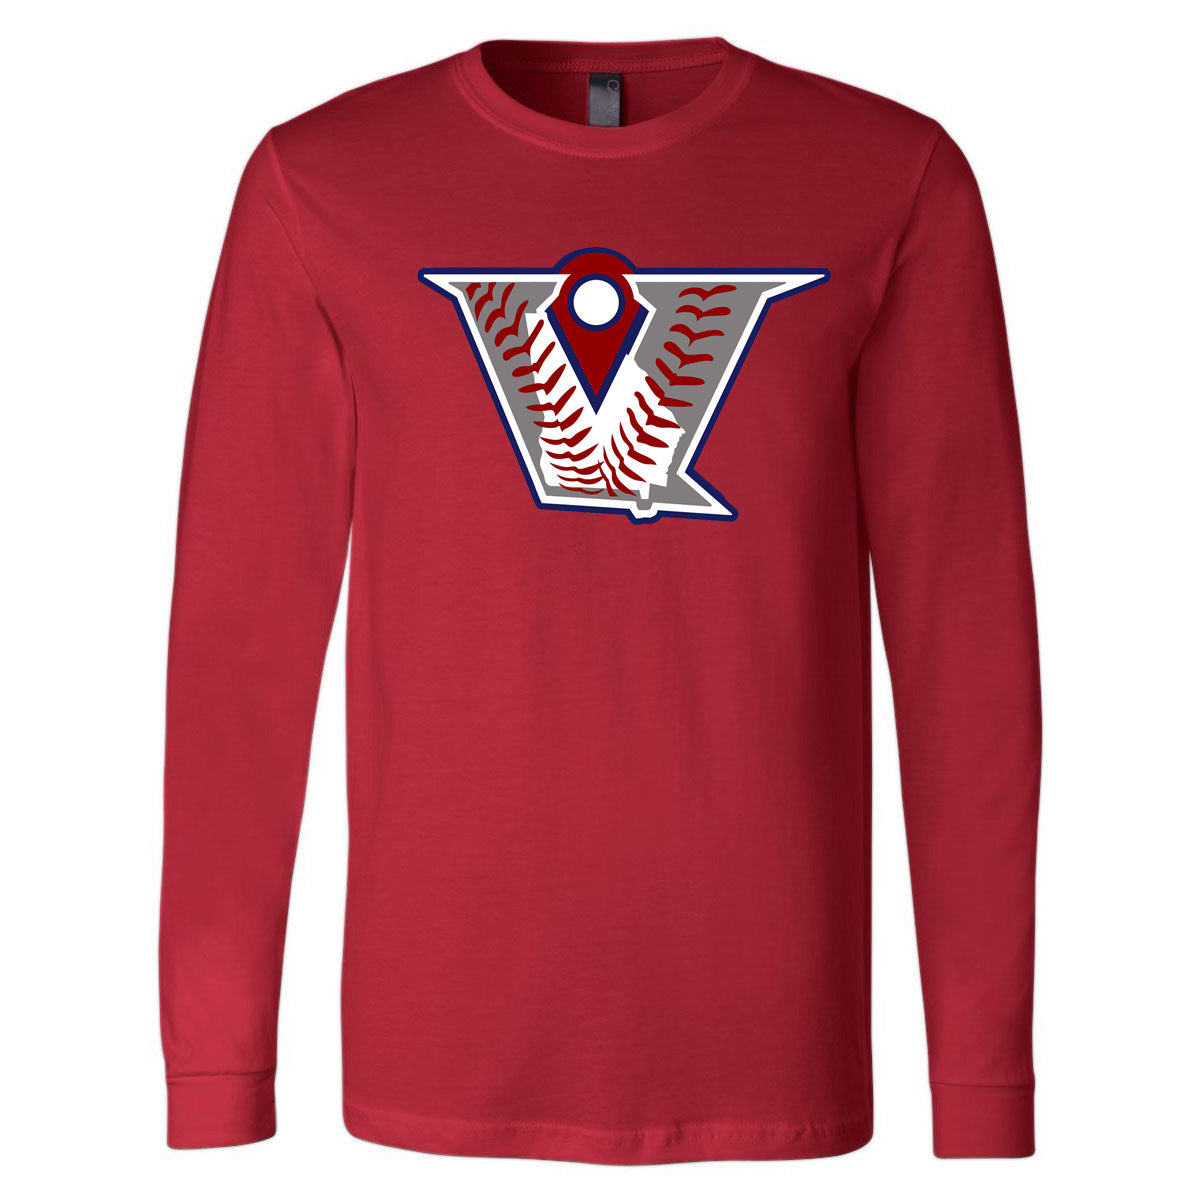 Velo BB - Velocity Baseball Logo - Red Tee - Southern Grace Creations